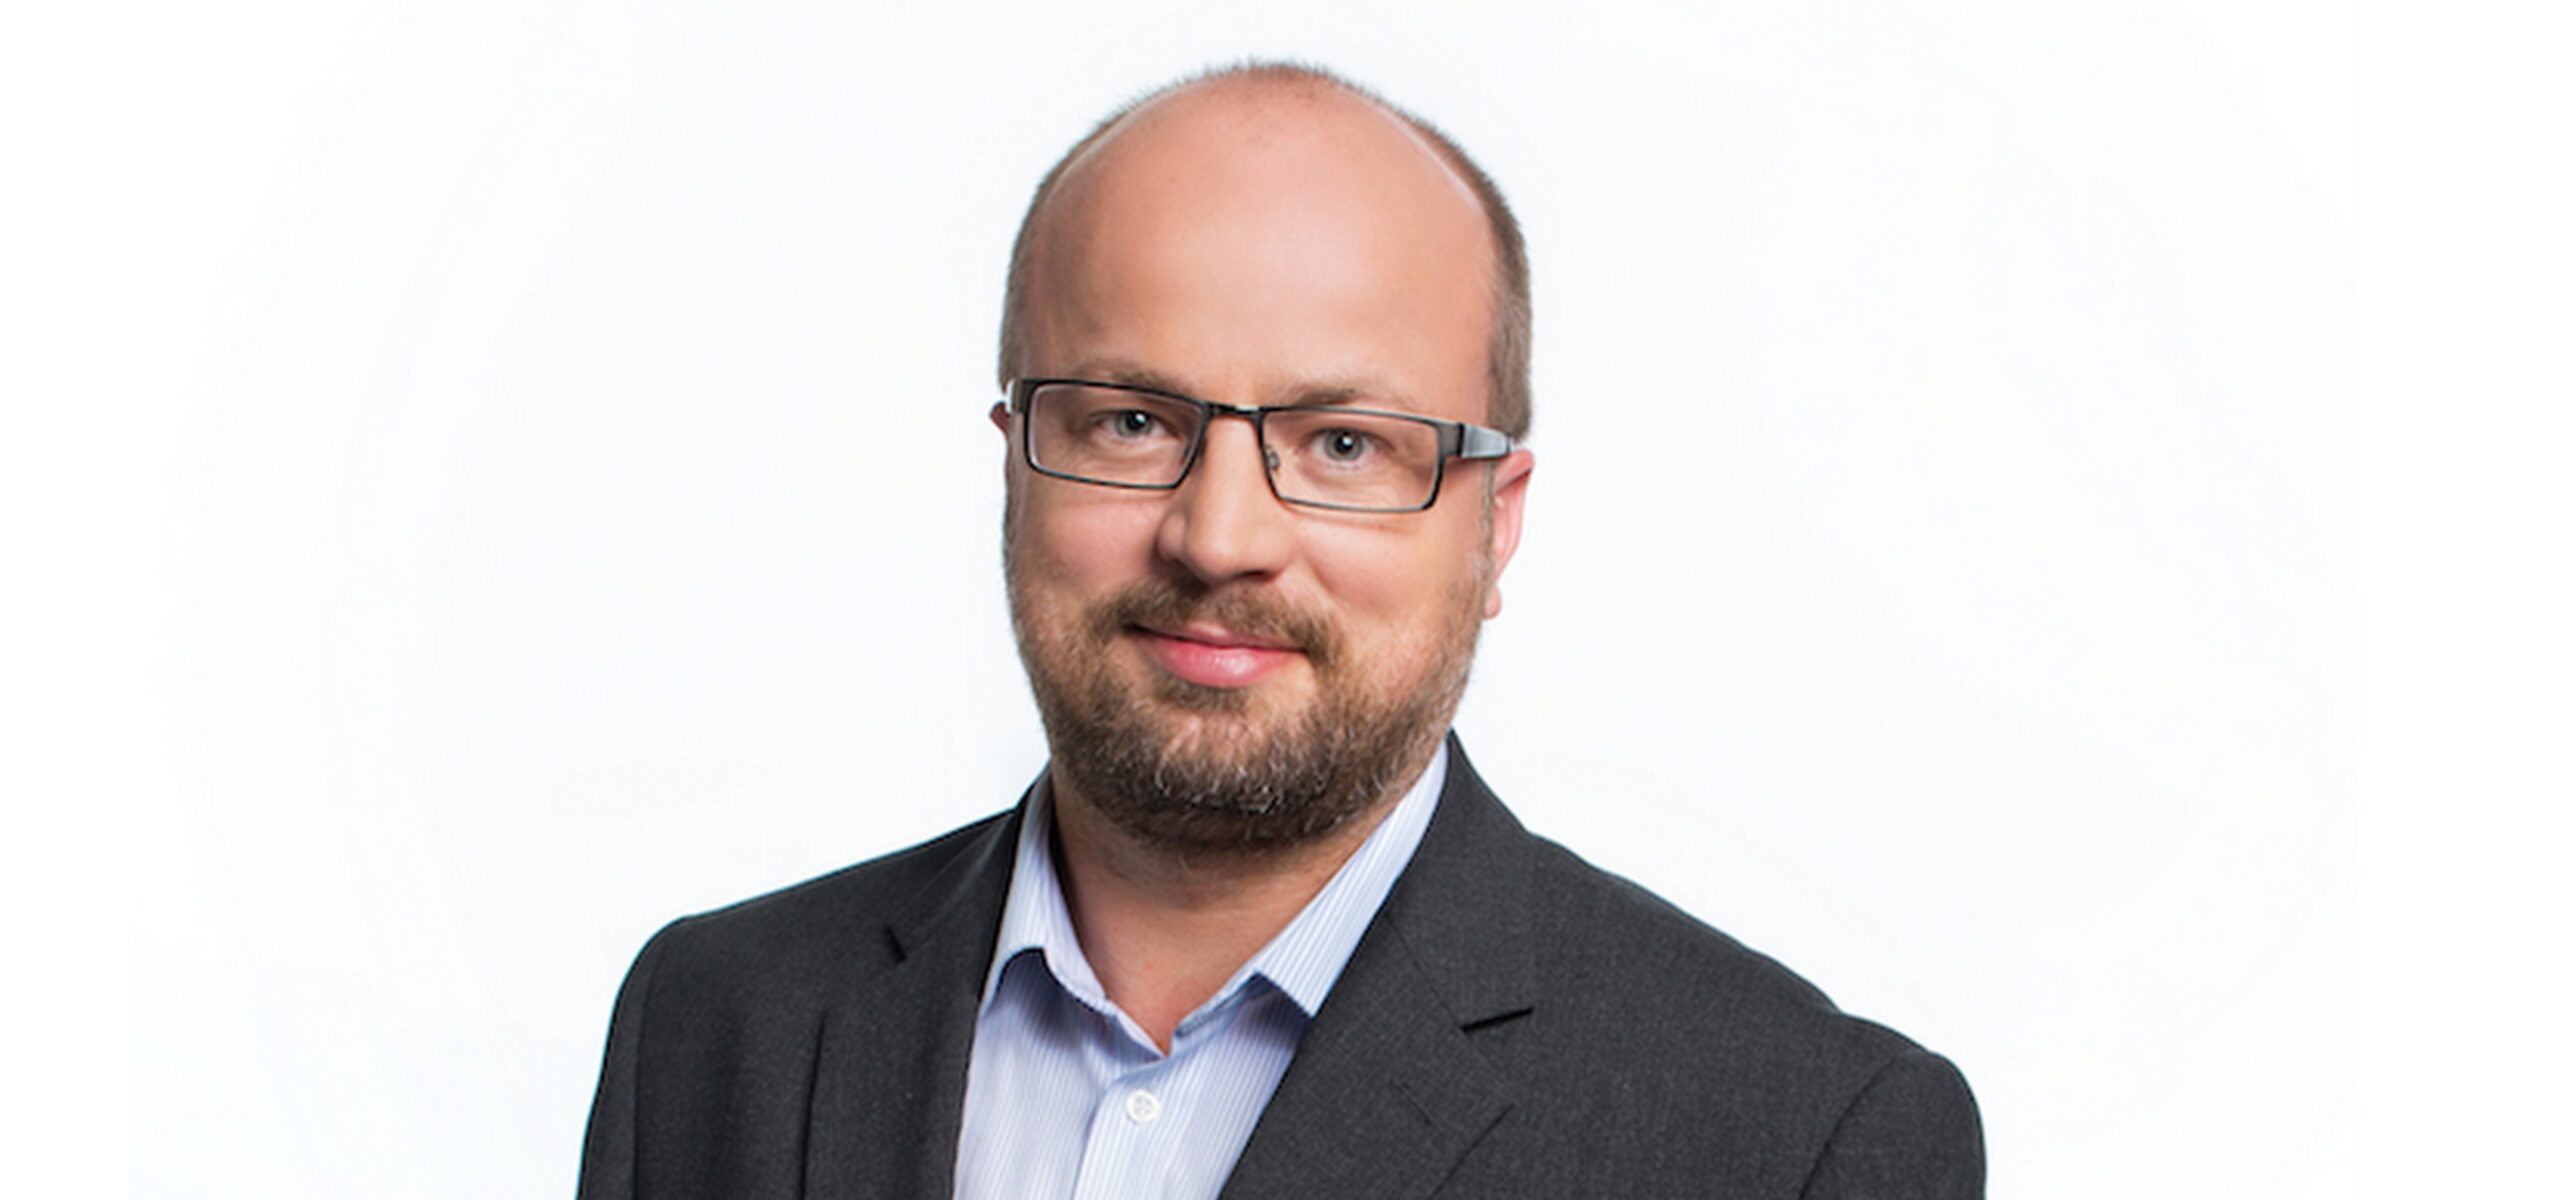 Nowy Dyrektor Generalny grupy Onet.pl RASP - Ringier Axel Springer Polska Mediarun Com Jonny Crowe onet scaled